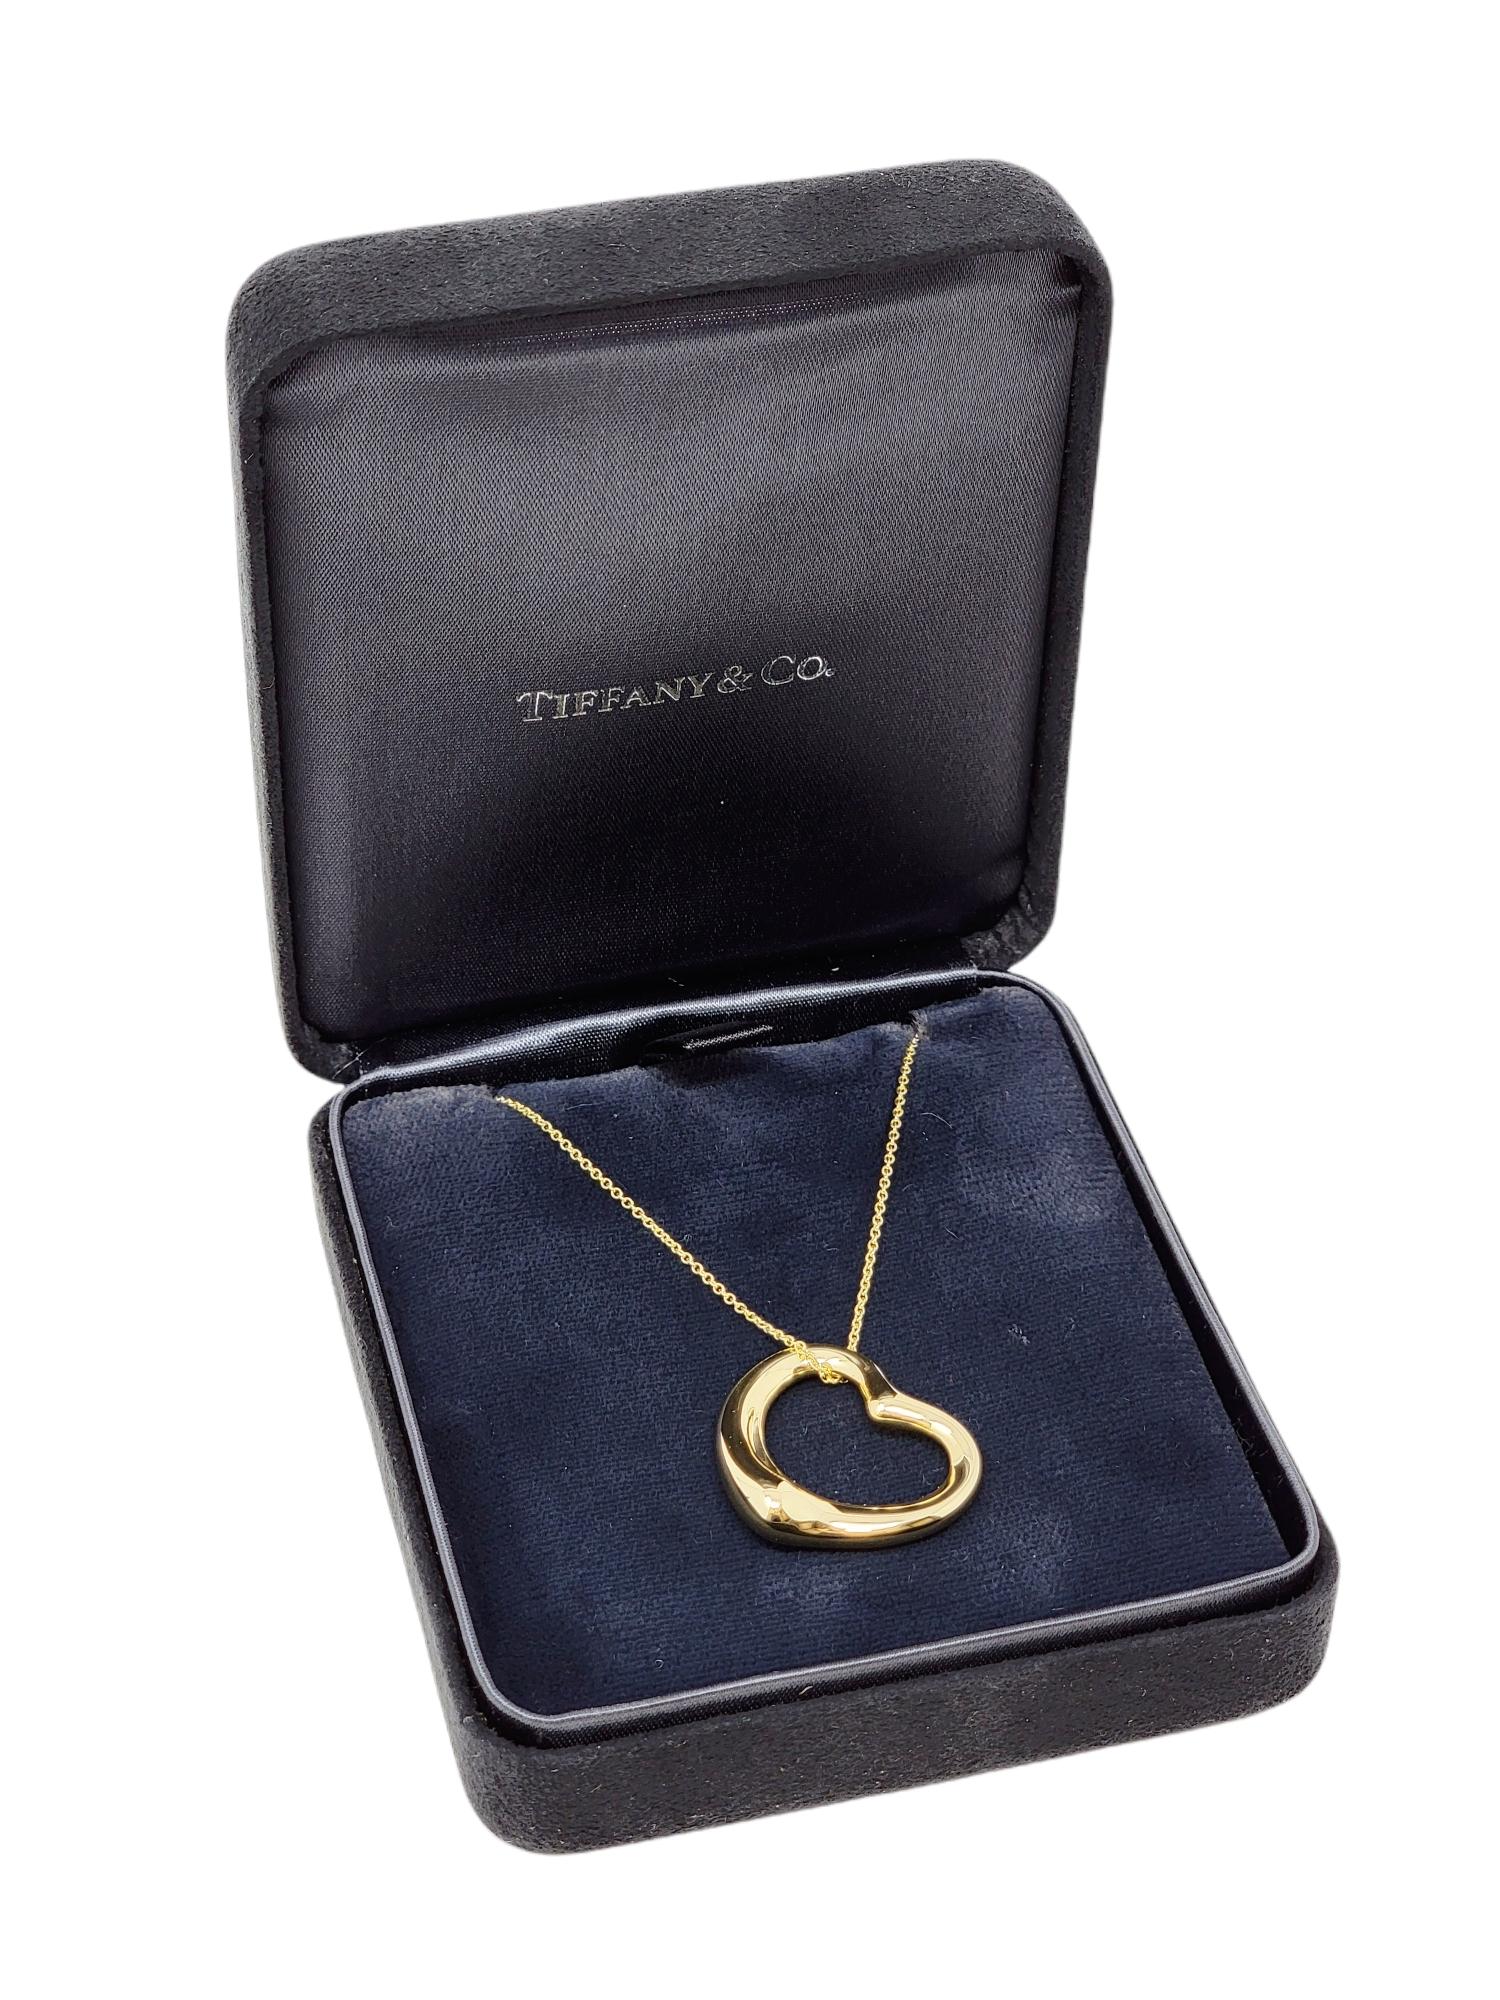 Elsa Peretti for Tiffany & Co. 18 Karat Yellow Gold Open Heart Pendant Necklace 2